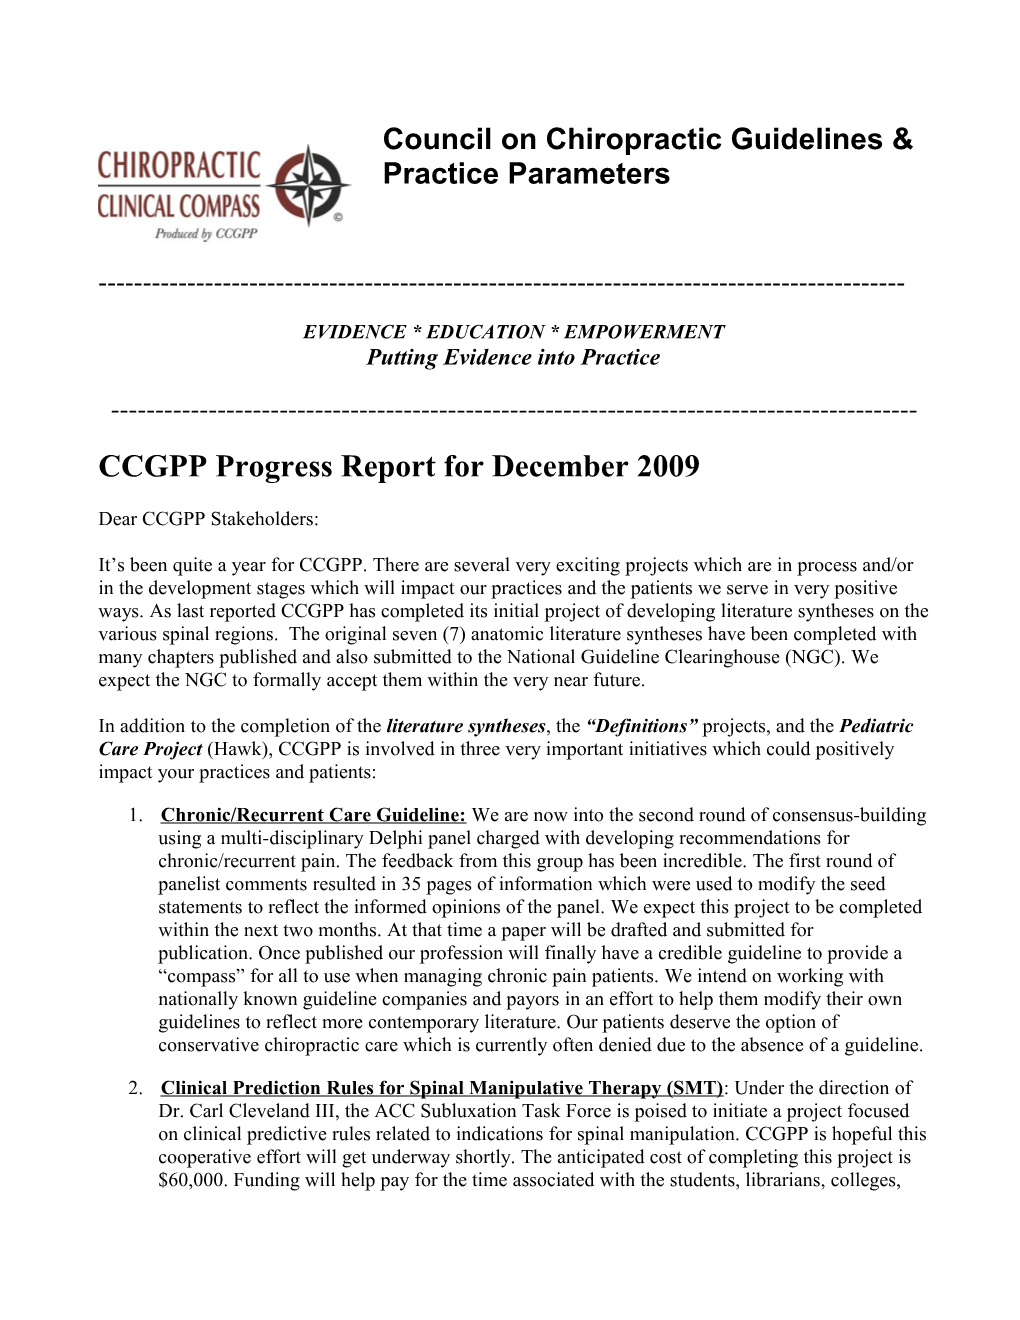 CCGPP Progress Report for December 200